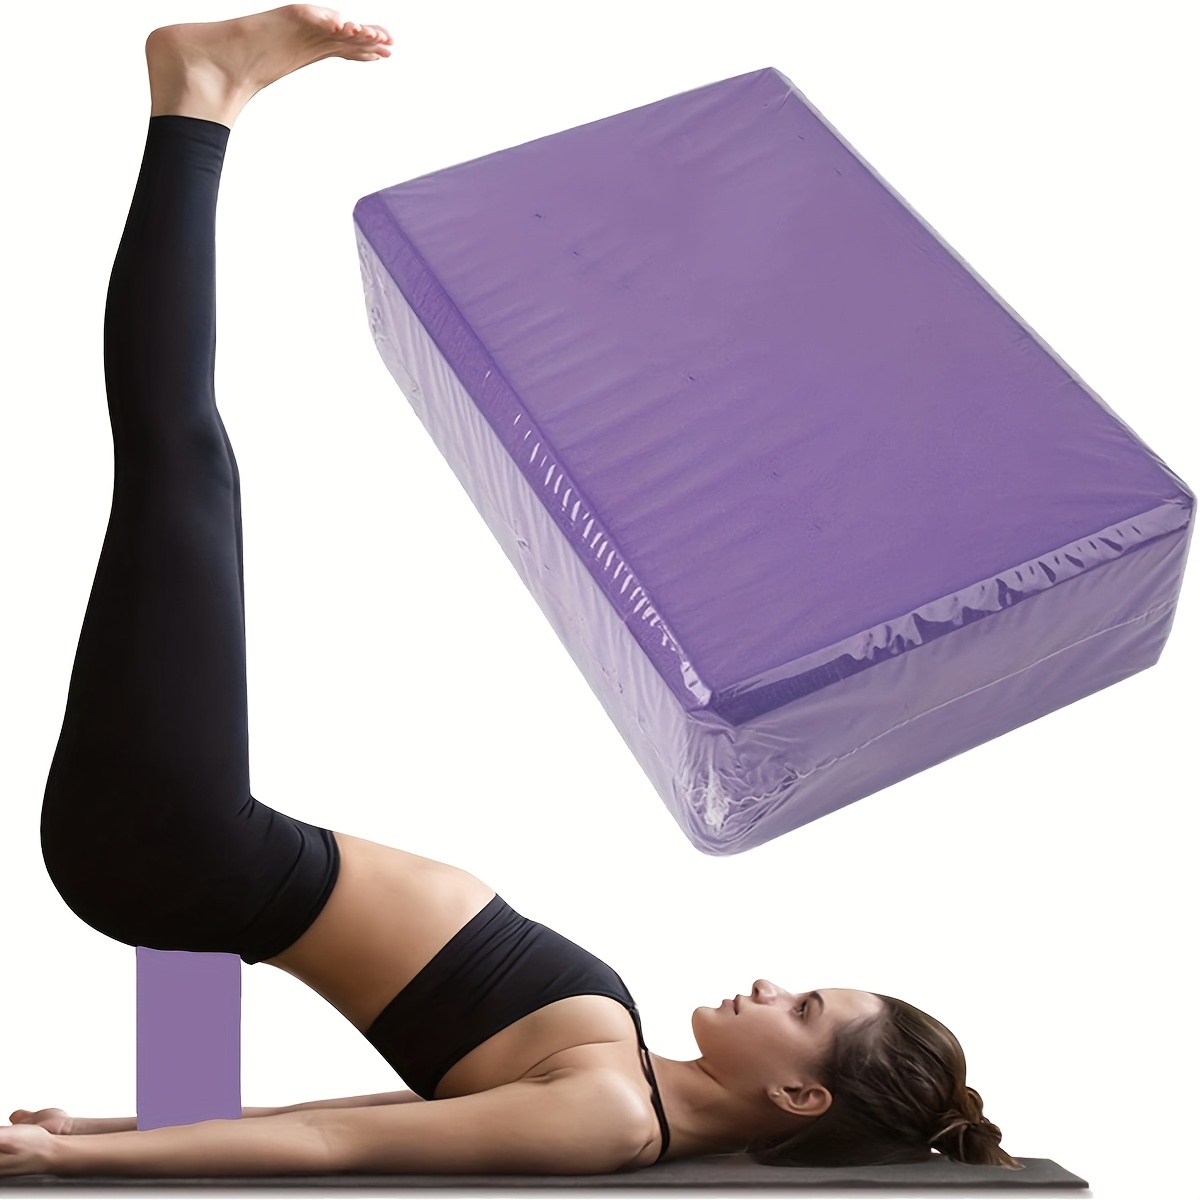 Yoga Block (1 or 2 PCs) High Density EVA Foam Block to Support and